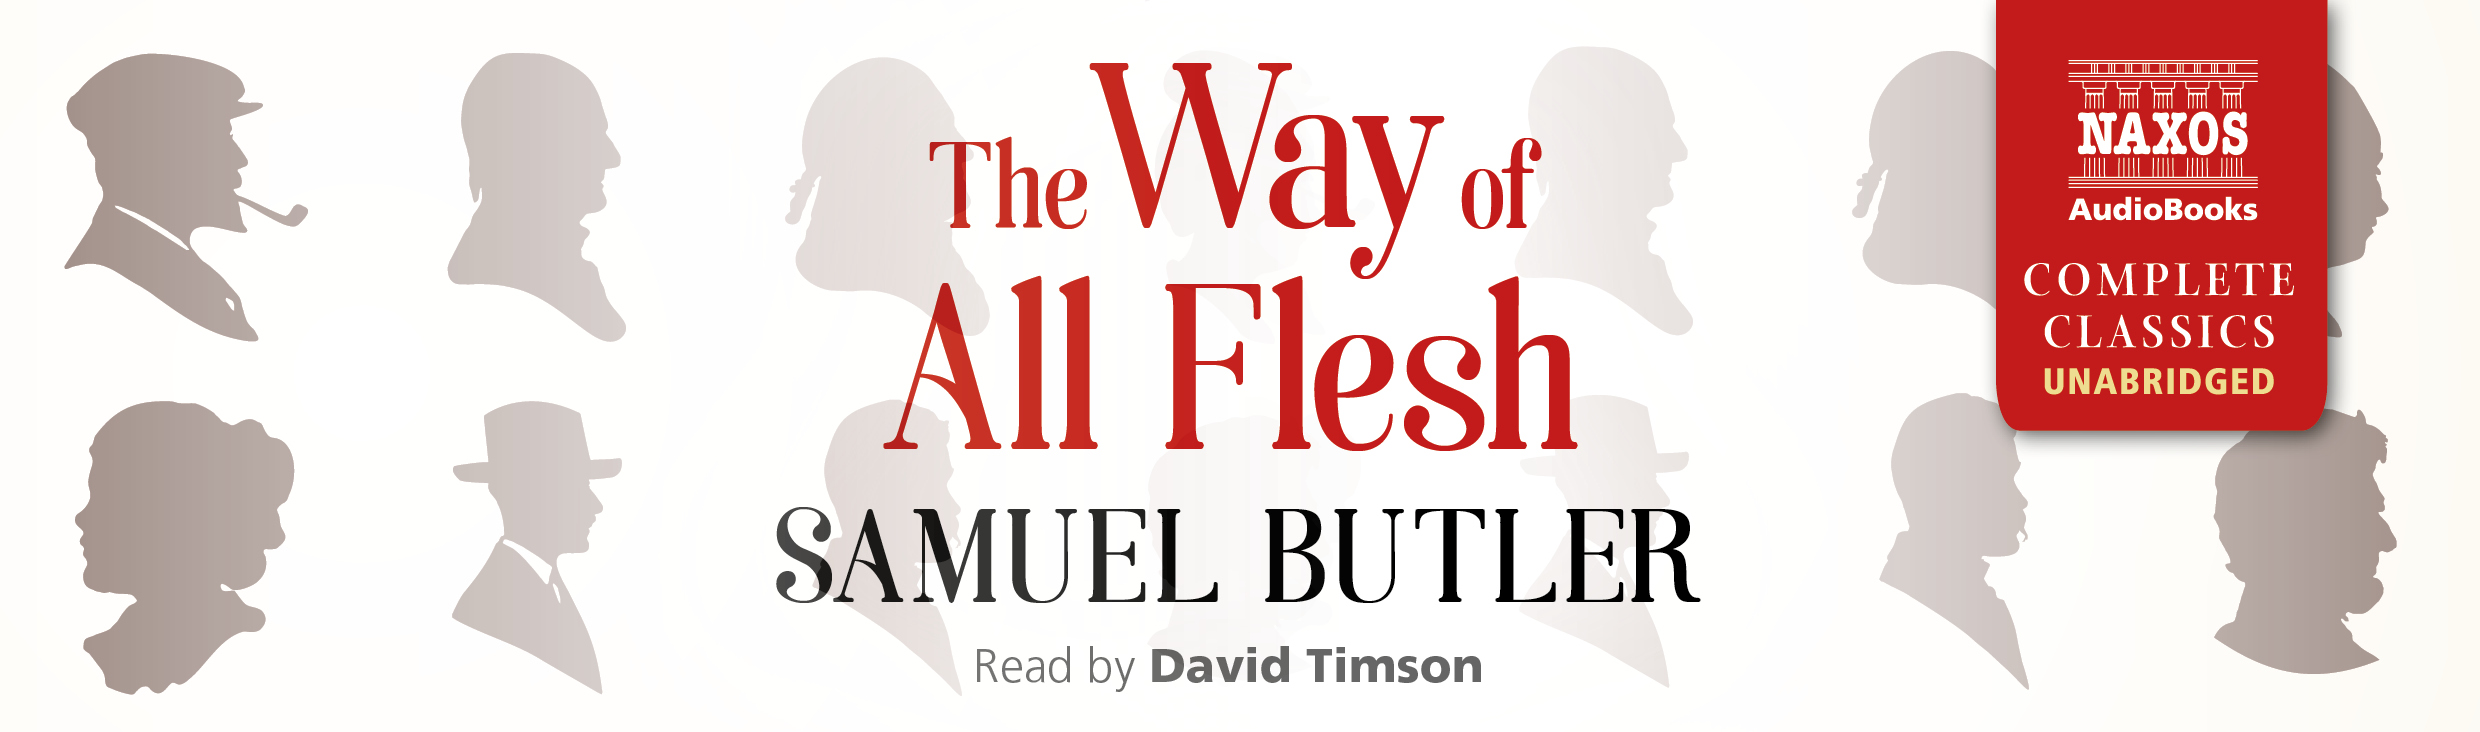 The Way of All Flesh (unabridged)